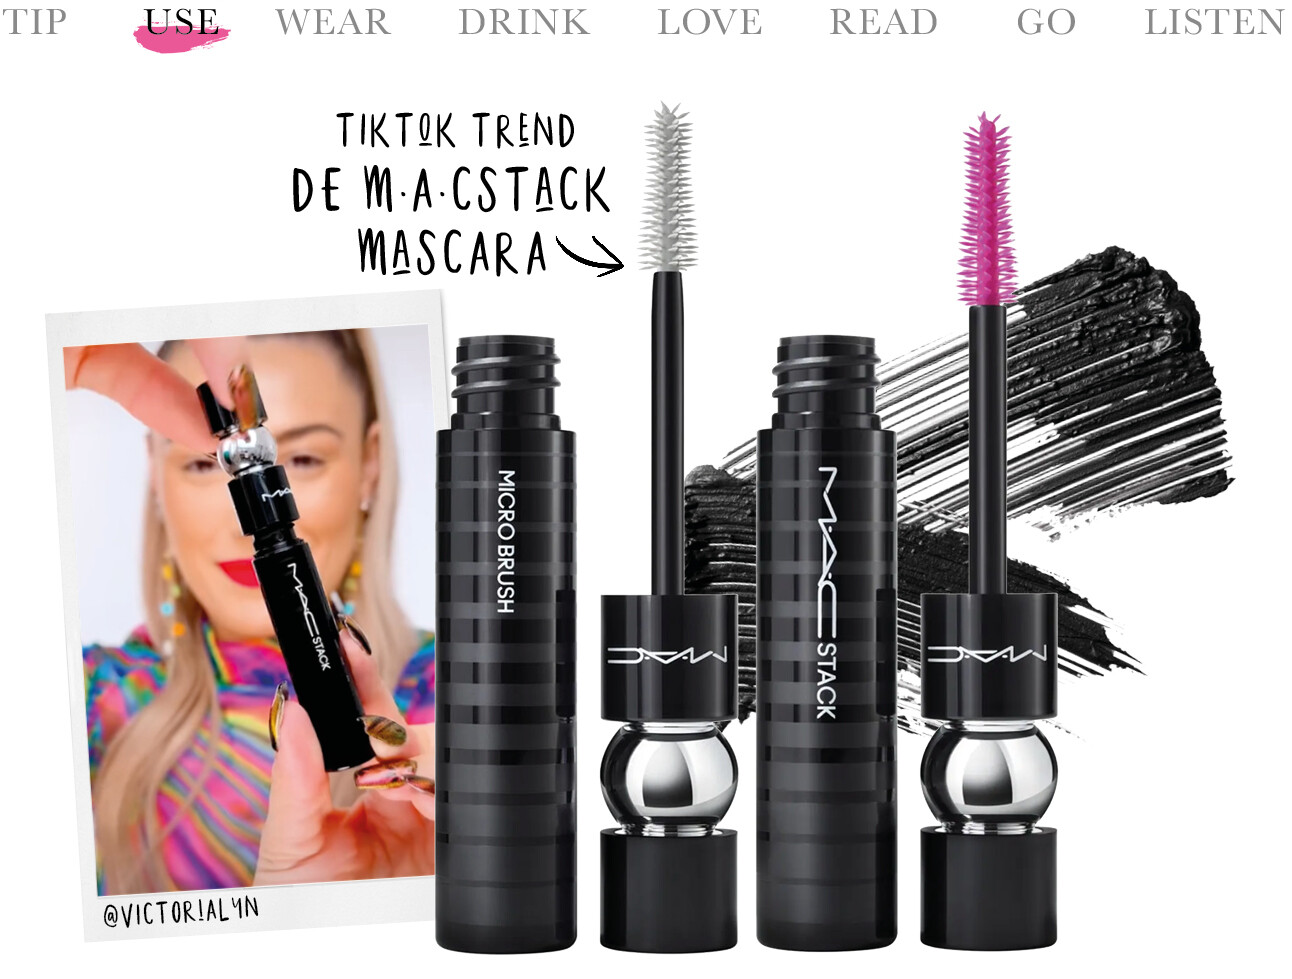 MACStack mascara tiktok viral beauty tips